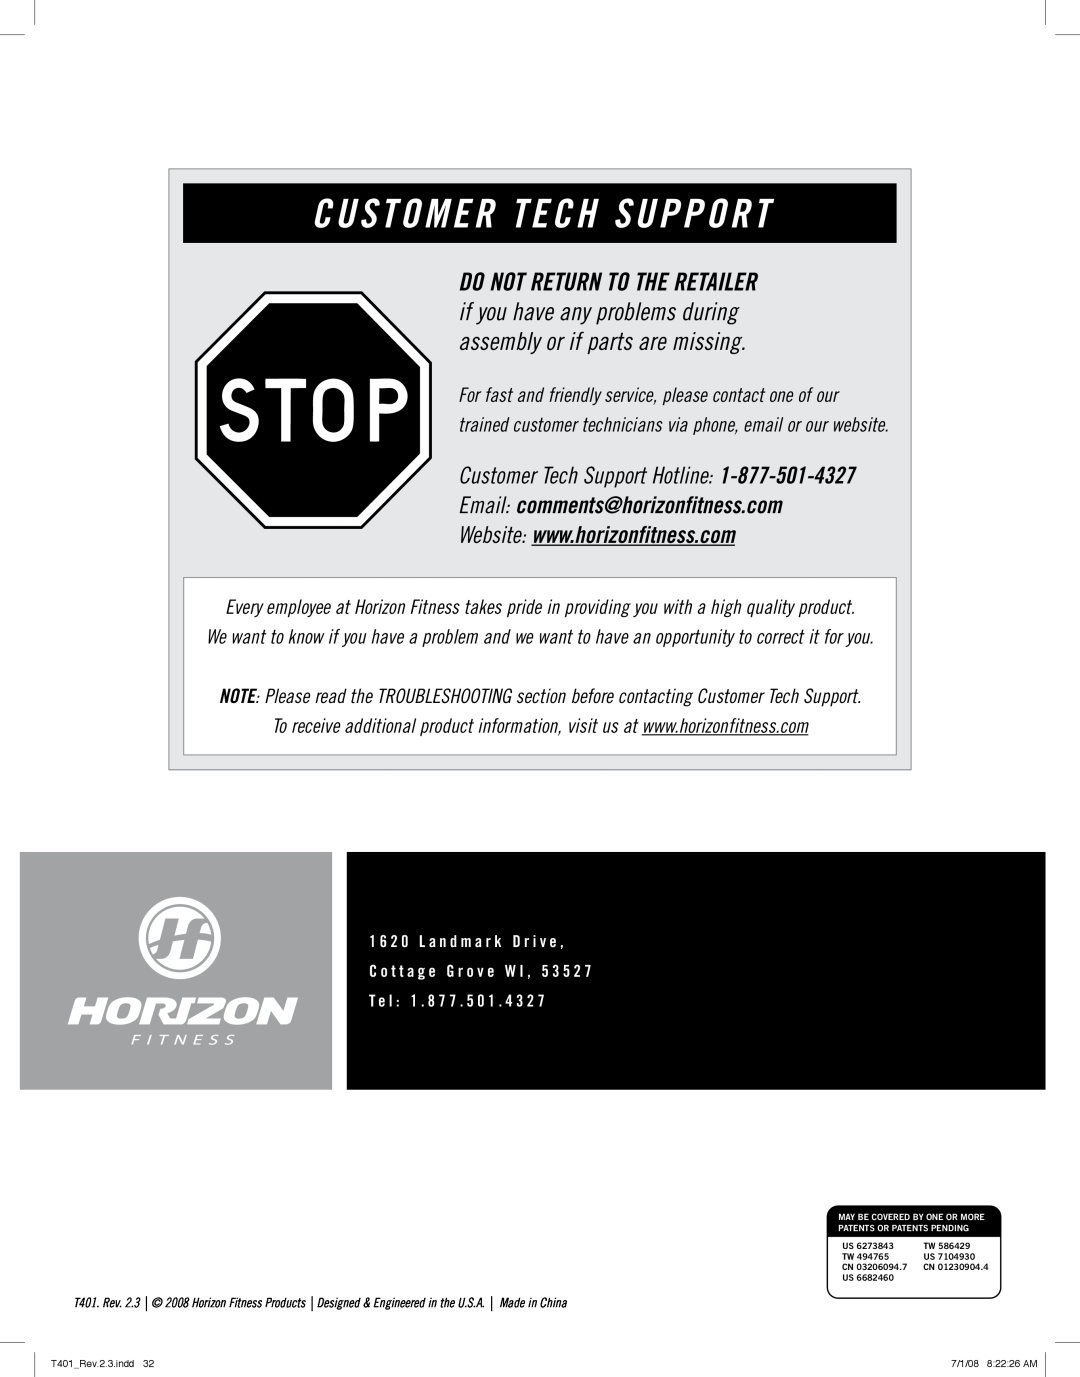 Horizon Fitness T401 manual Customer Tech Support Hotline Email comments@horizonfitness.com 